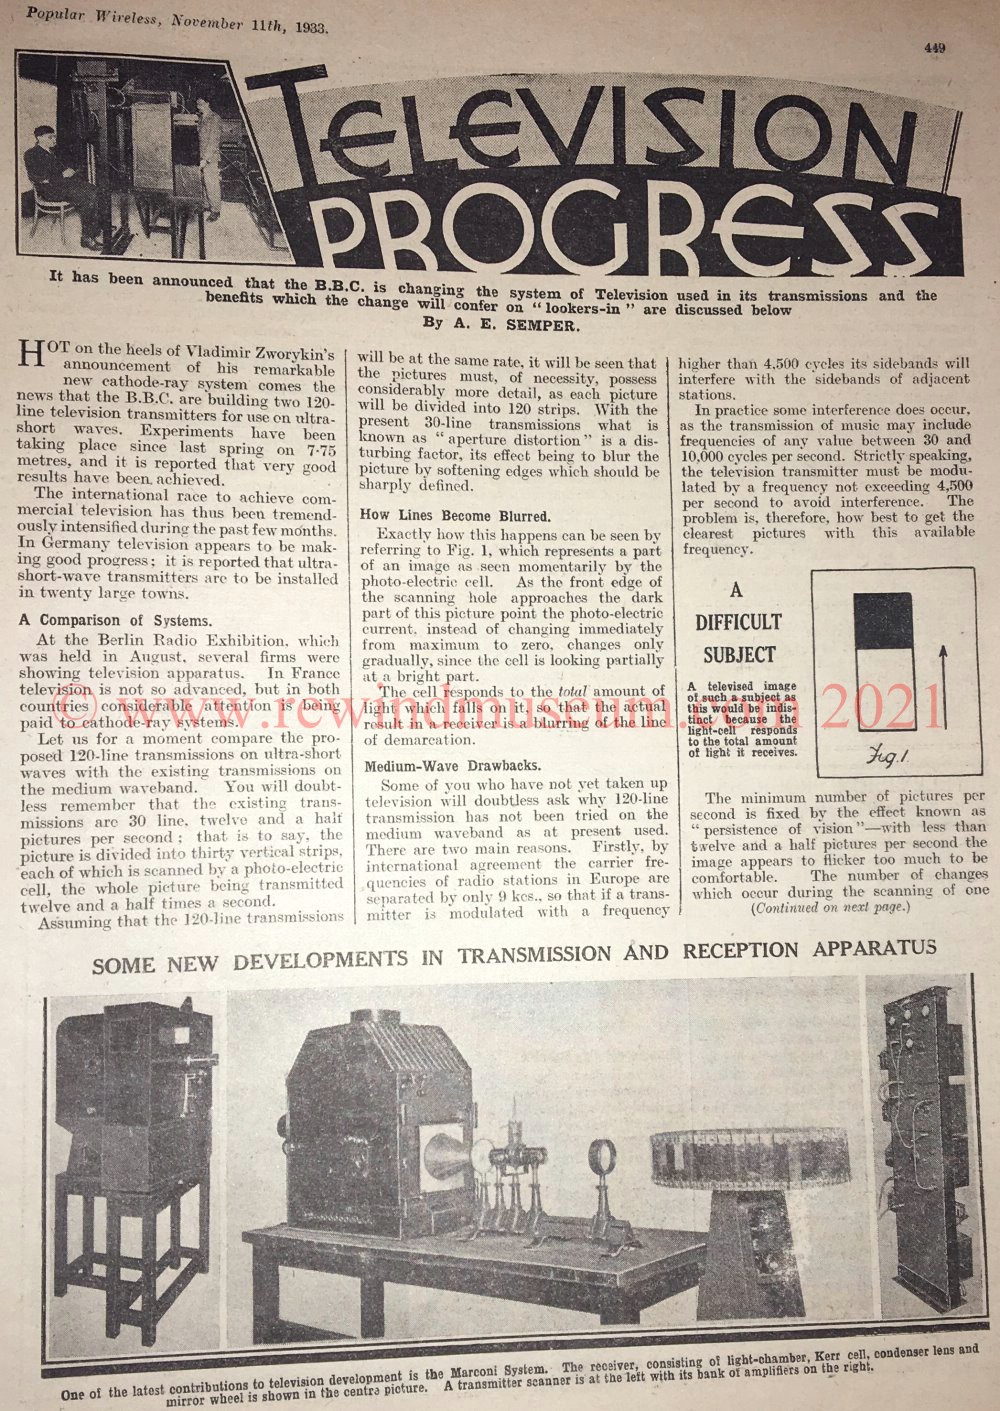 TELEVISION PROGRESS. Popular Wireless. Nov. 1933